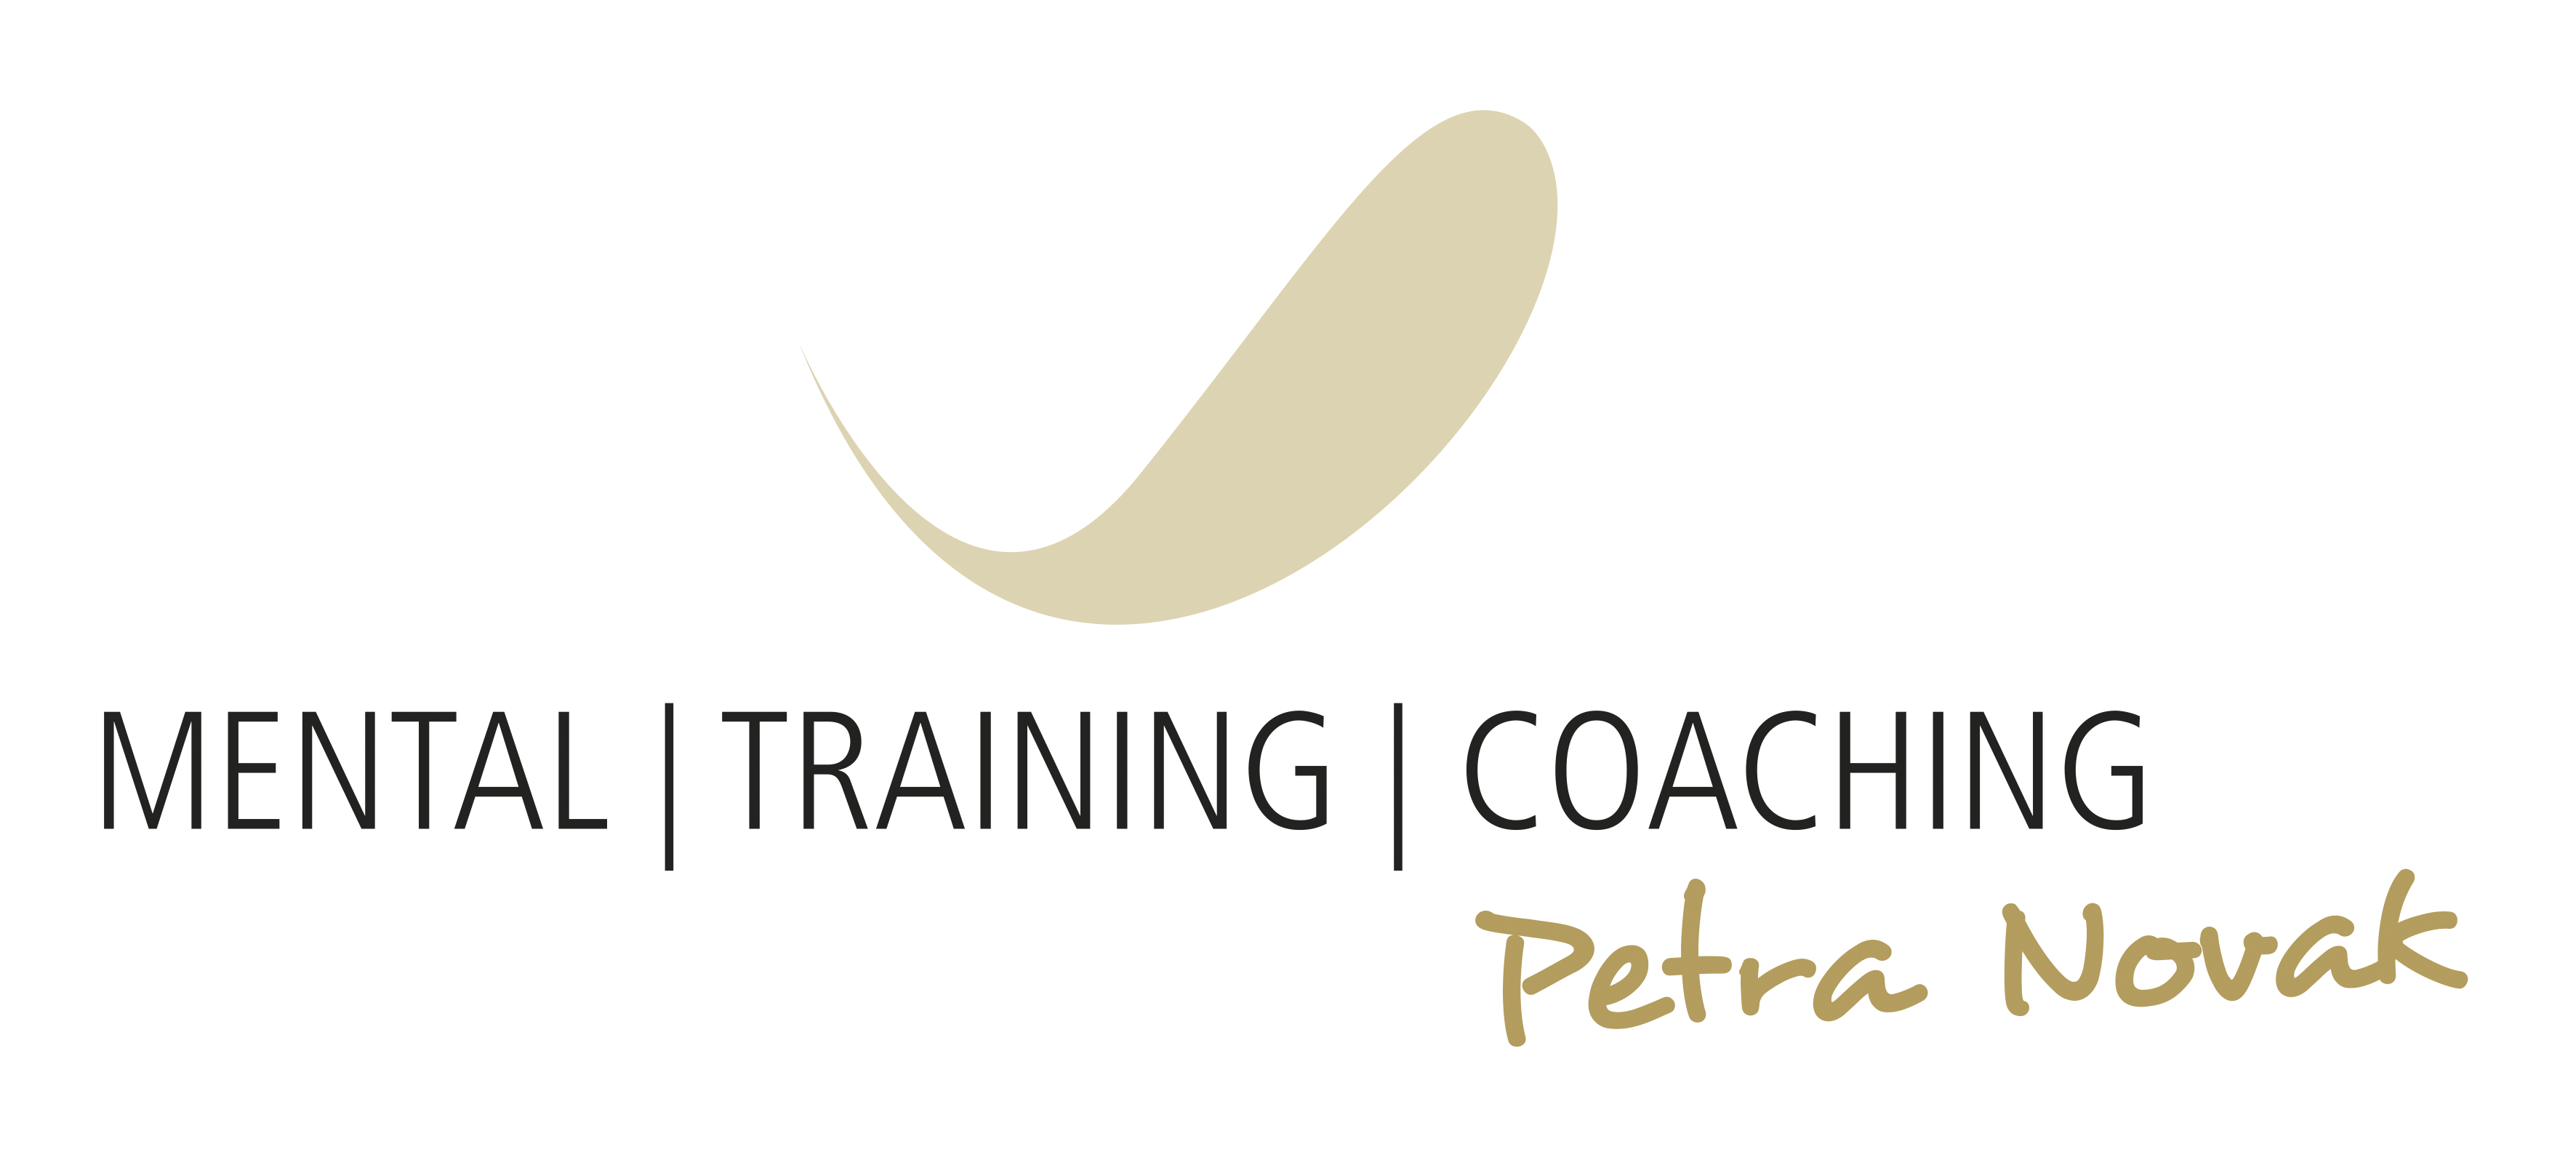 Petra Novak Mental Coach Logo